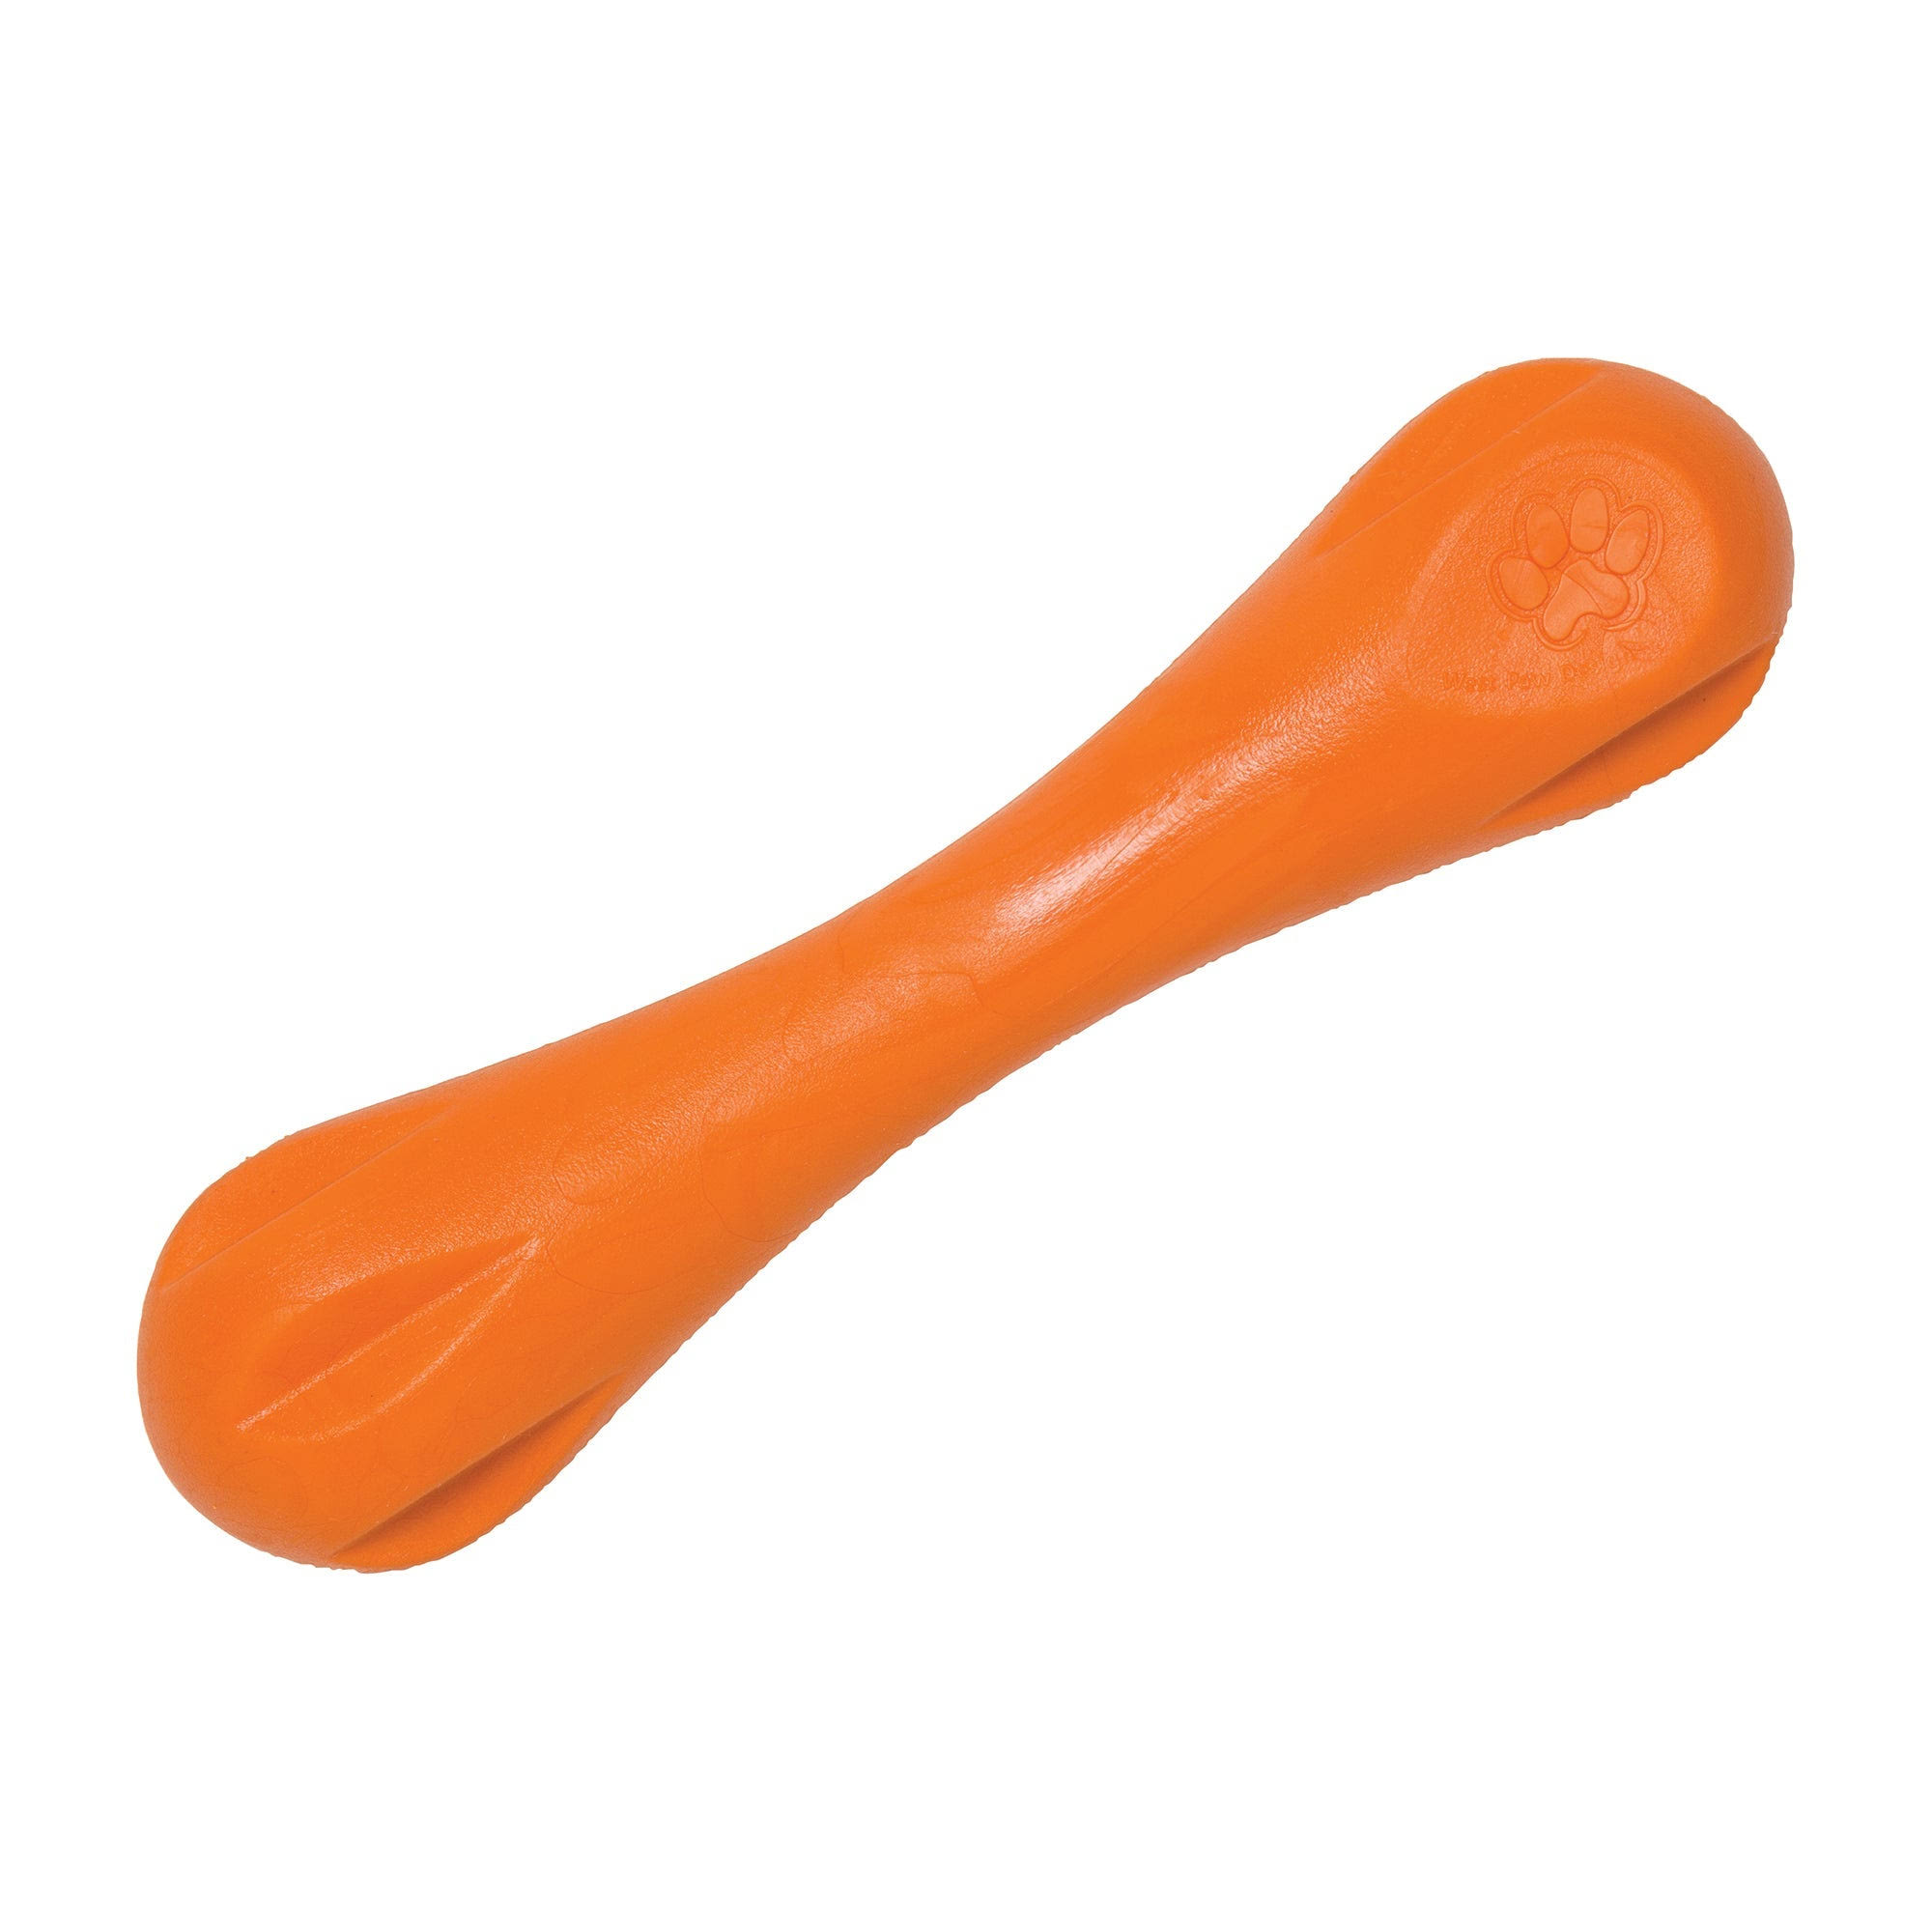 West Paw Design Zogoflex Dog Toy - Tangerine Hurley